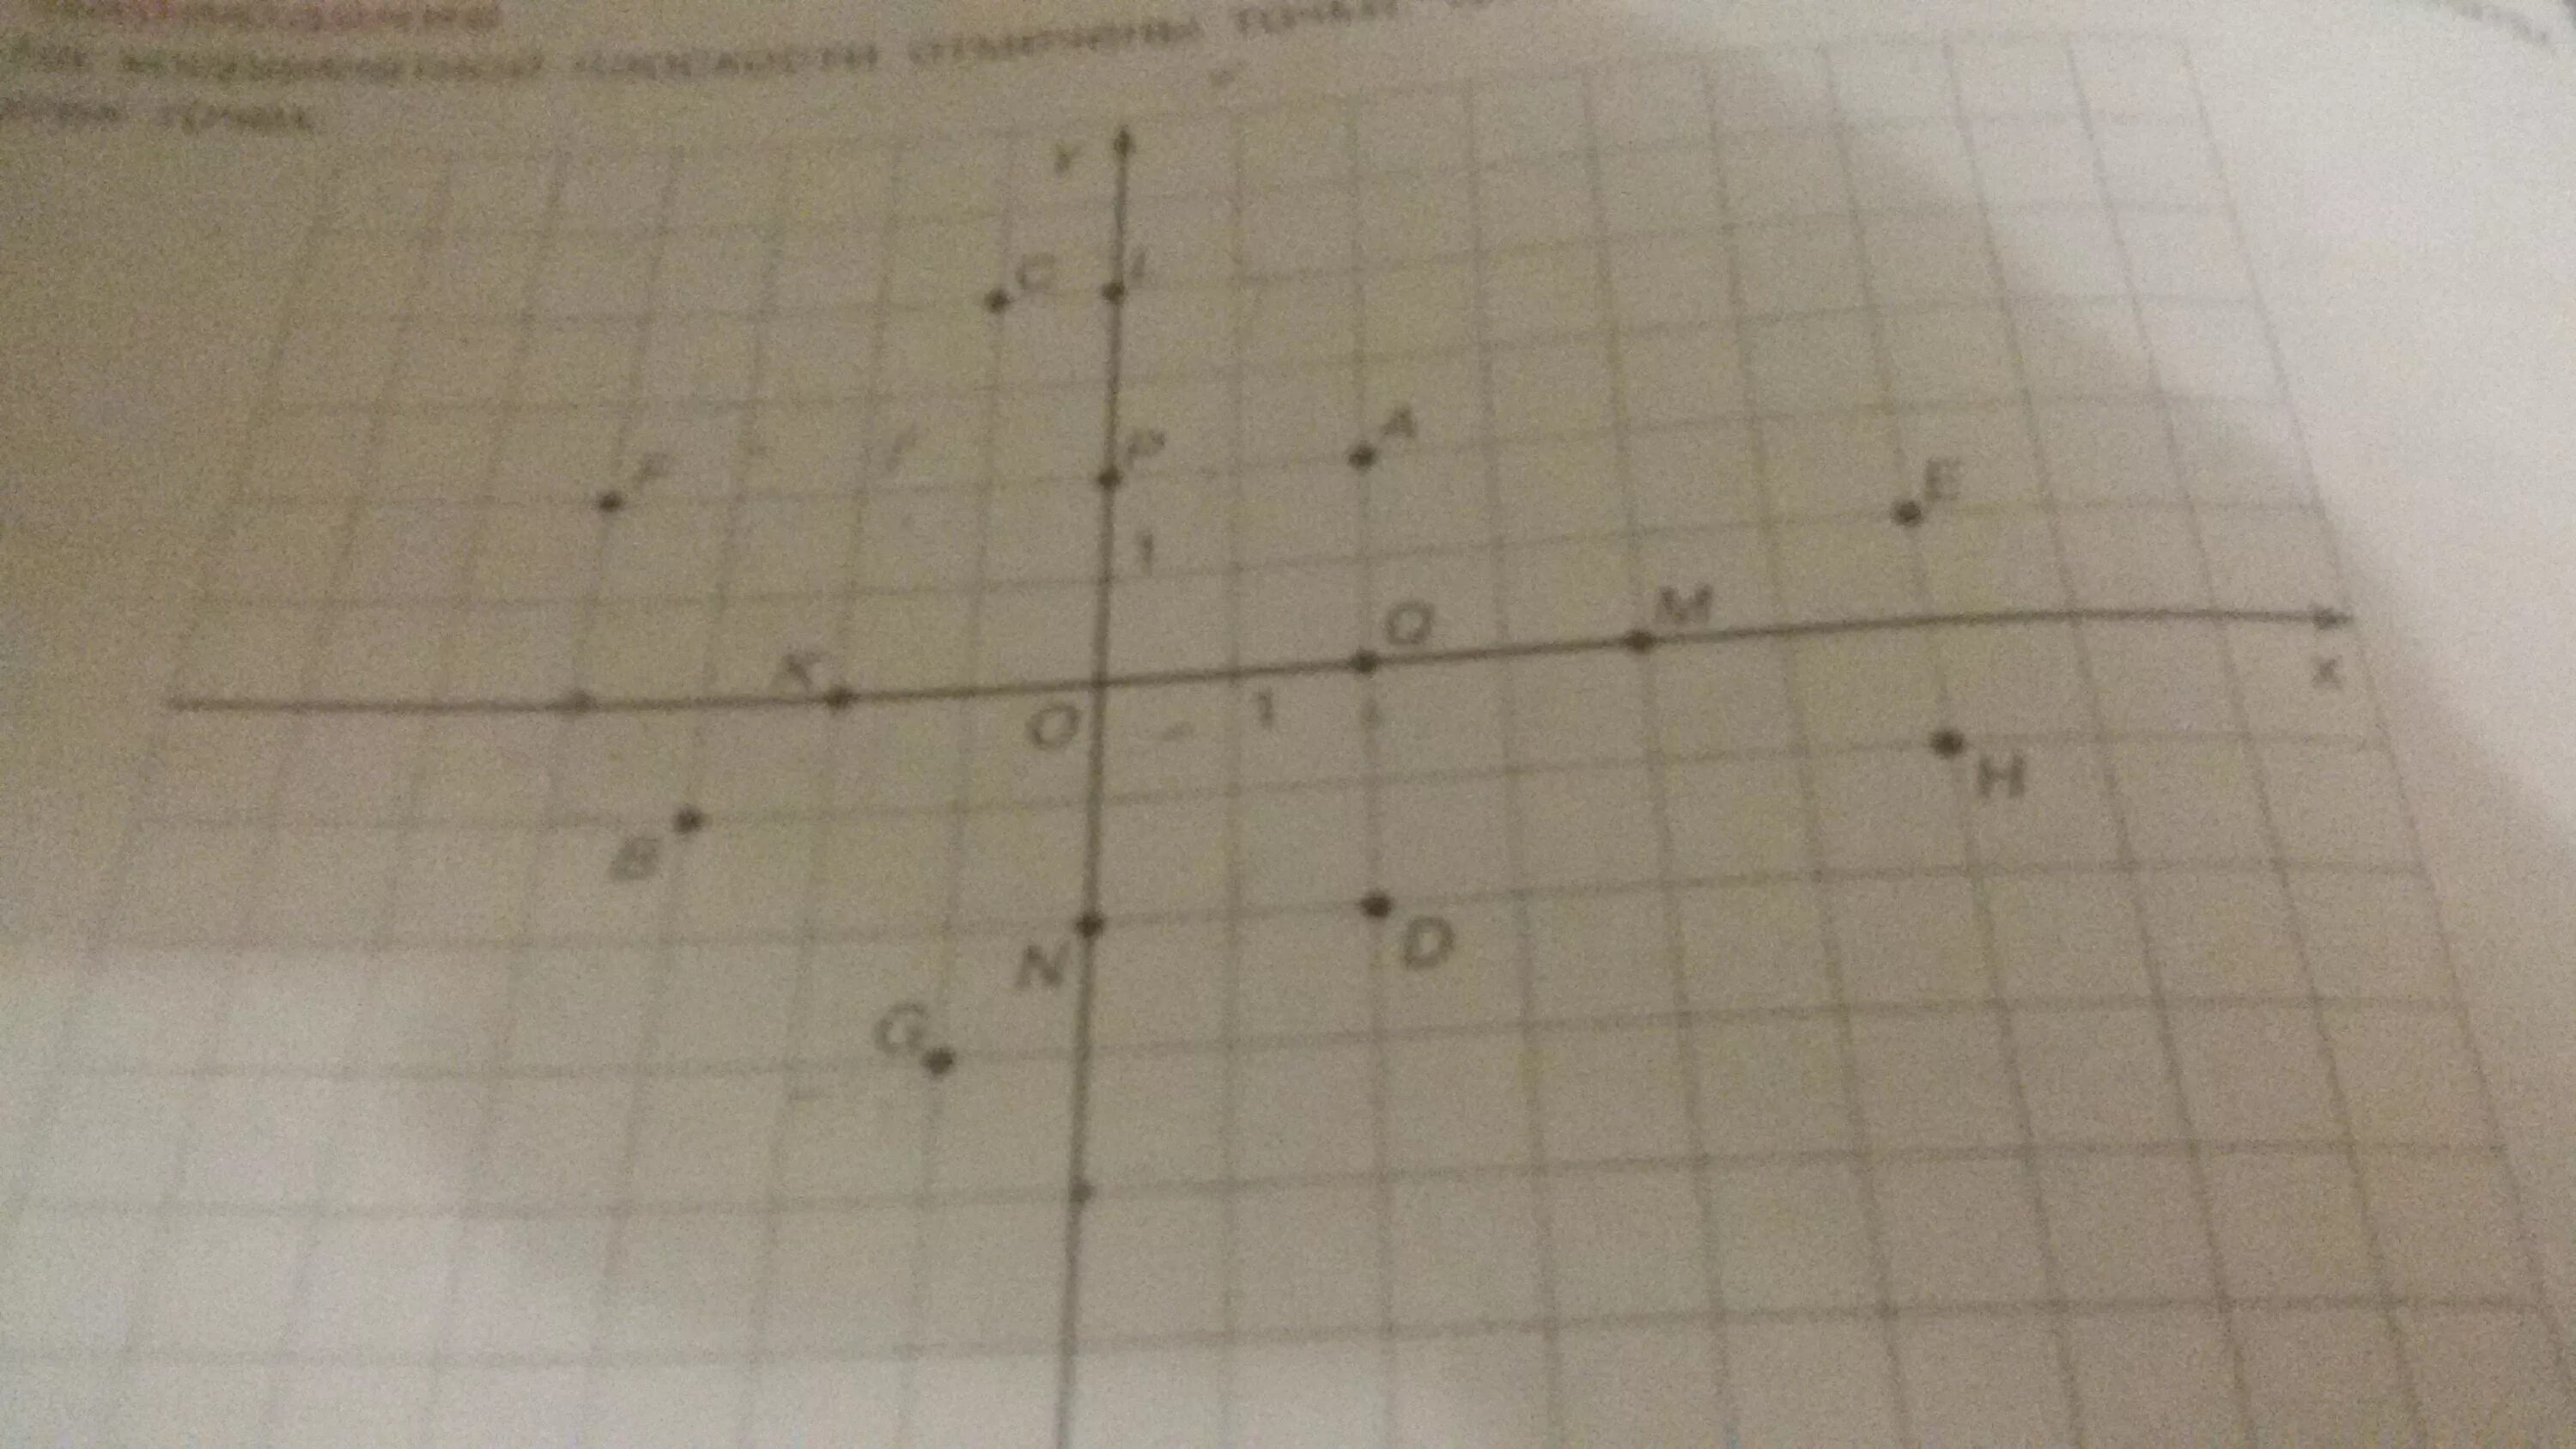 Отметьте на координатной плоскости точки 2 5. На координатной плоскости отметьте и подпишите точки. На координатной плоскости отметьте точки со следующими координатами. Отметьте точки с указанными координатами а 2.5. На координатной плоскости отметьте следующие точки.